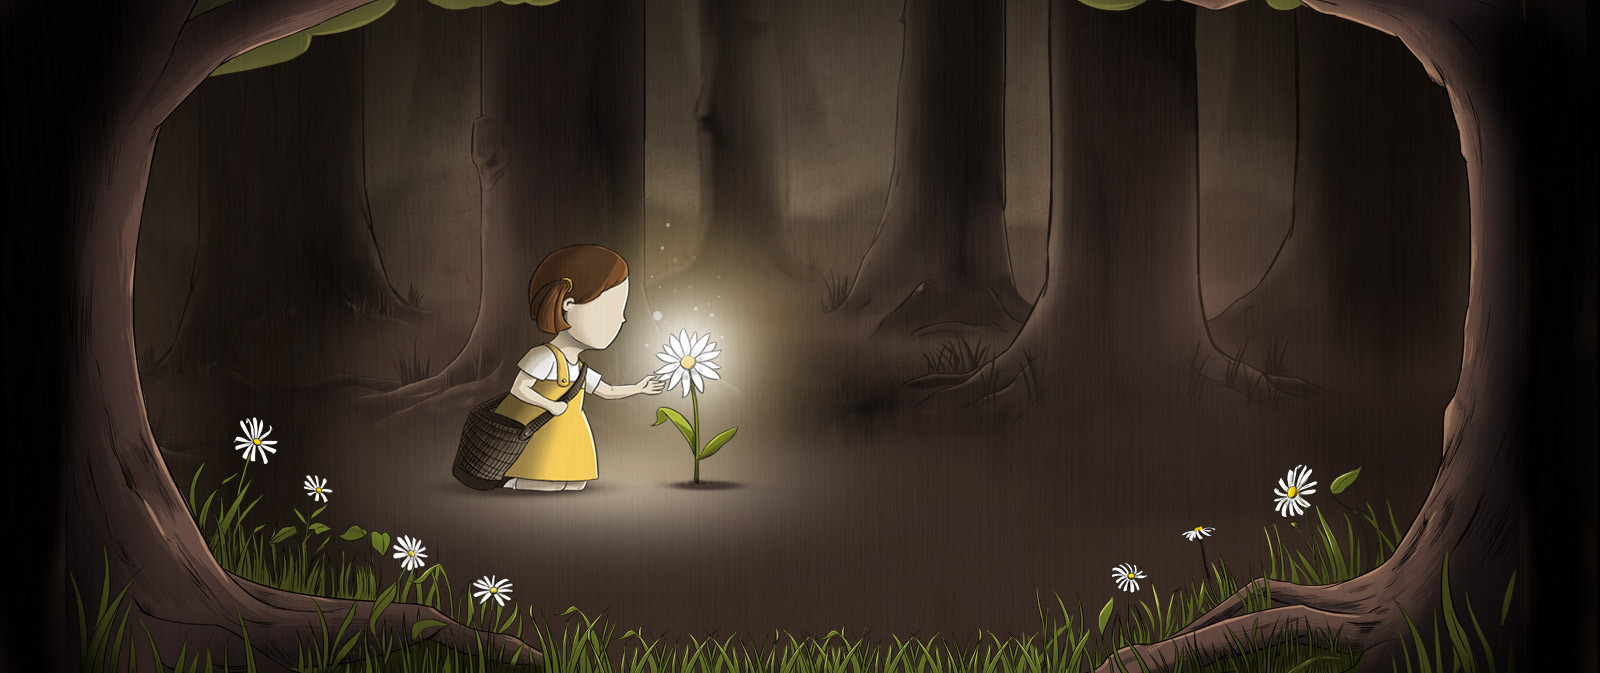 Daisy Chain: Ένα animation για το bullying [ΒΙΝΤΕΟ]